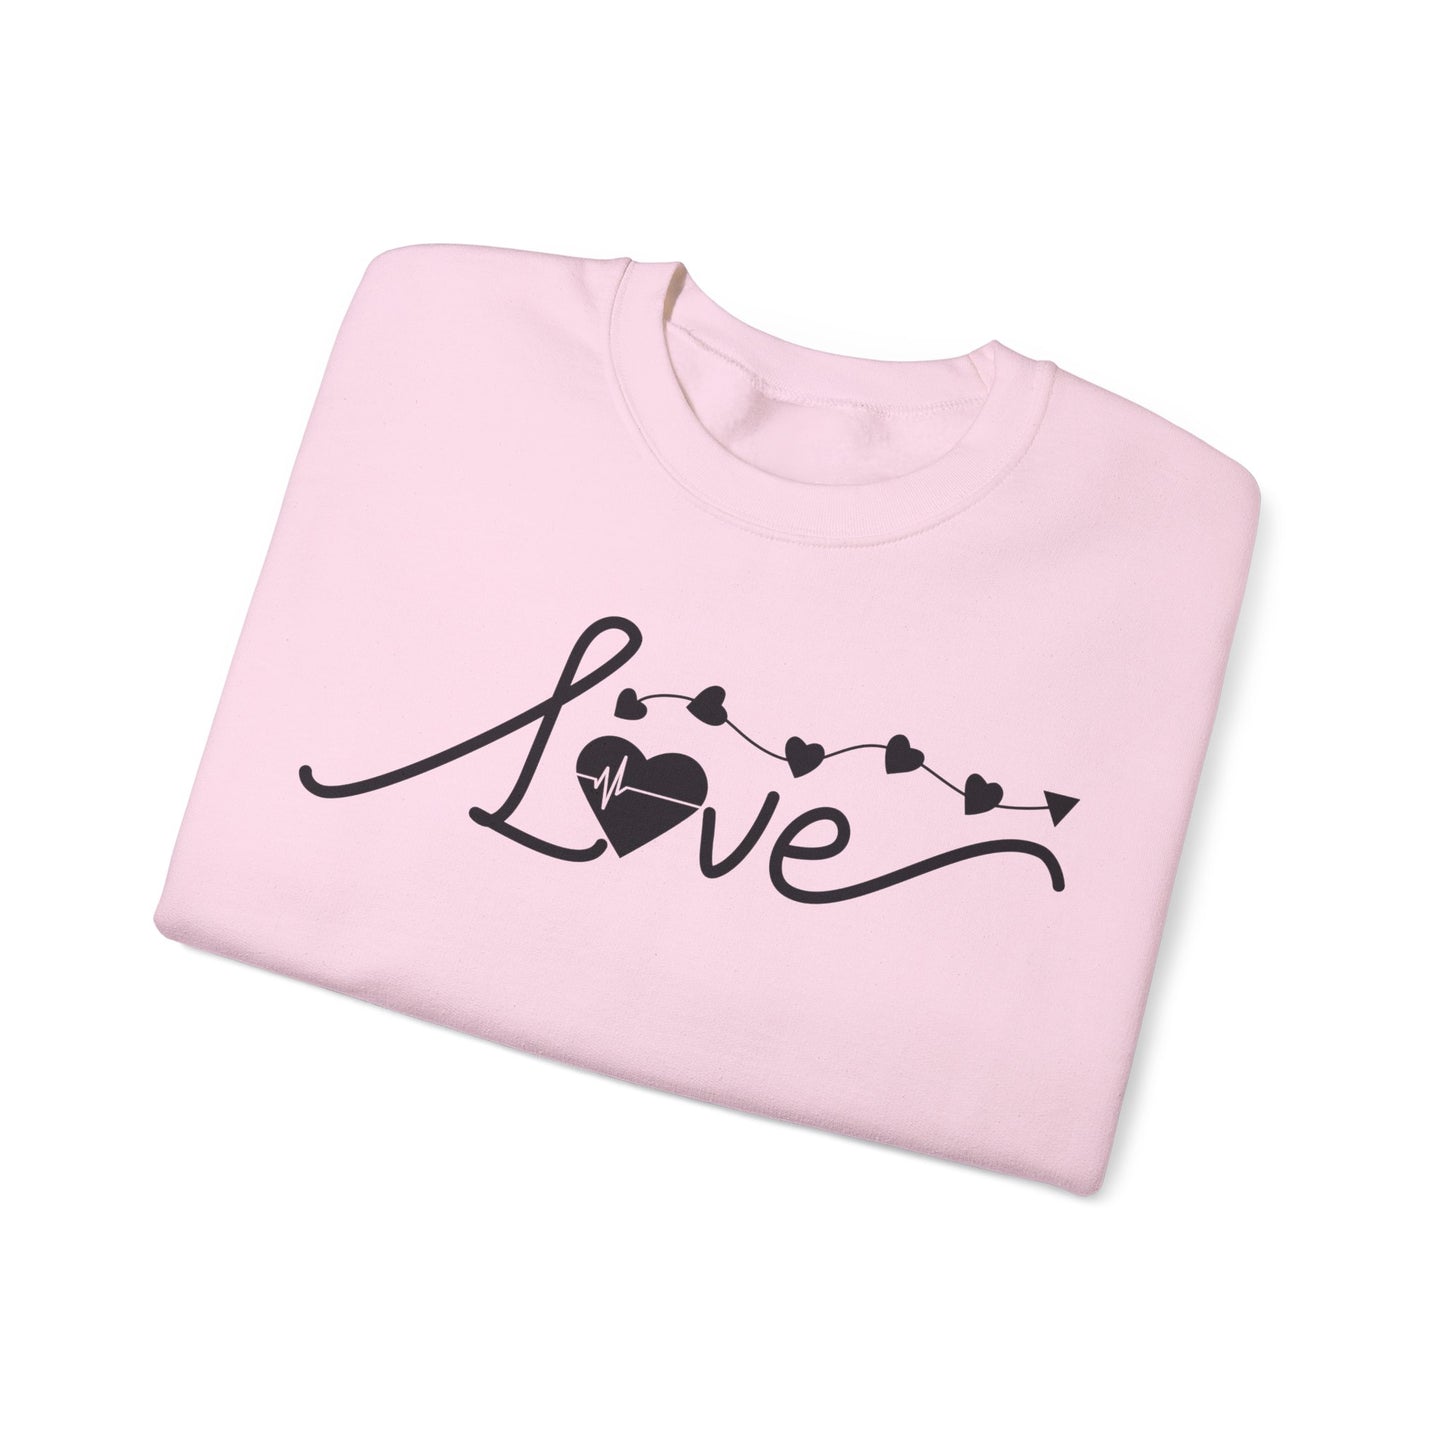 Self Love Heartbeat Sweatshirt for Valentines Day - Crewneck Sweatshirt